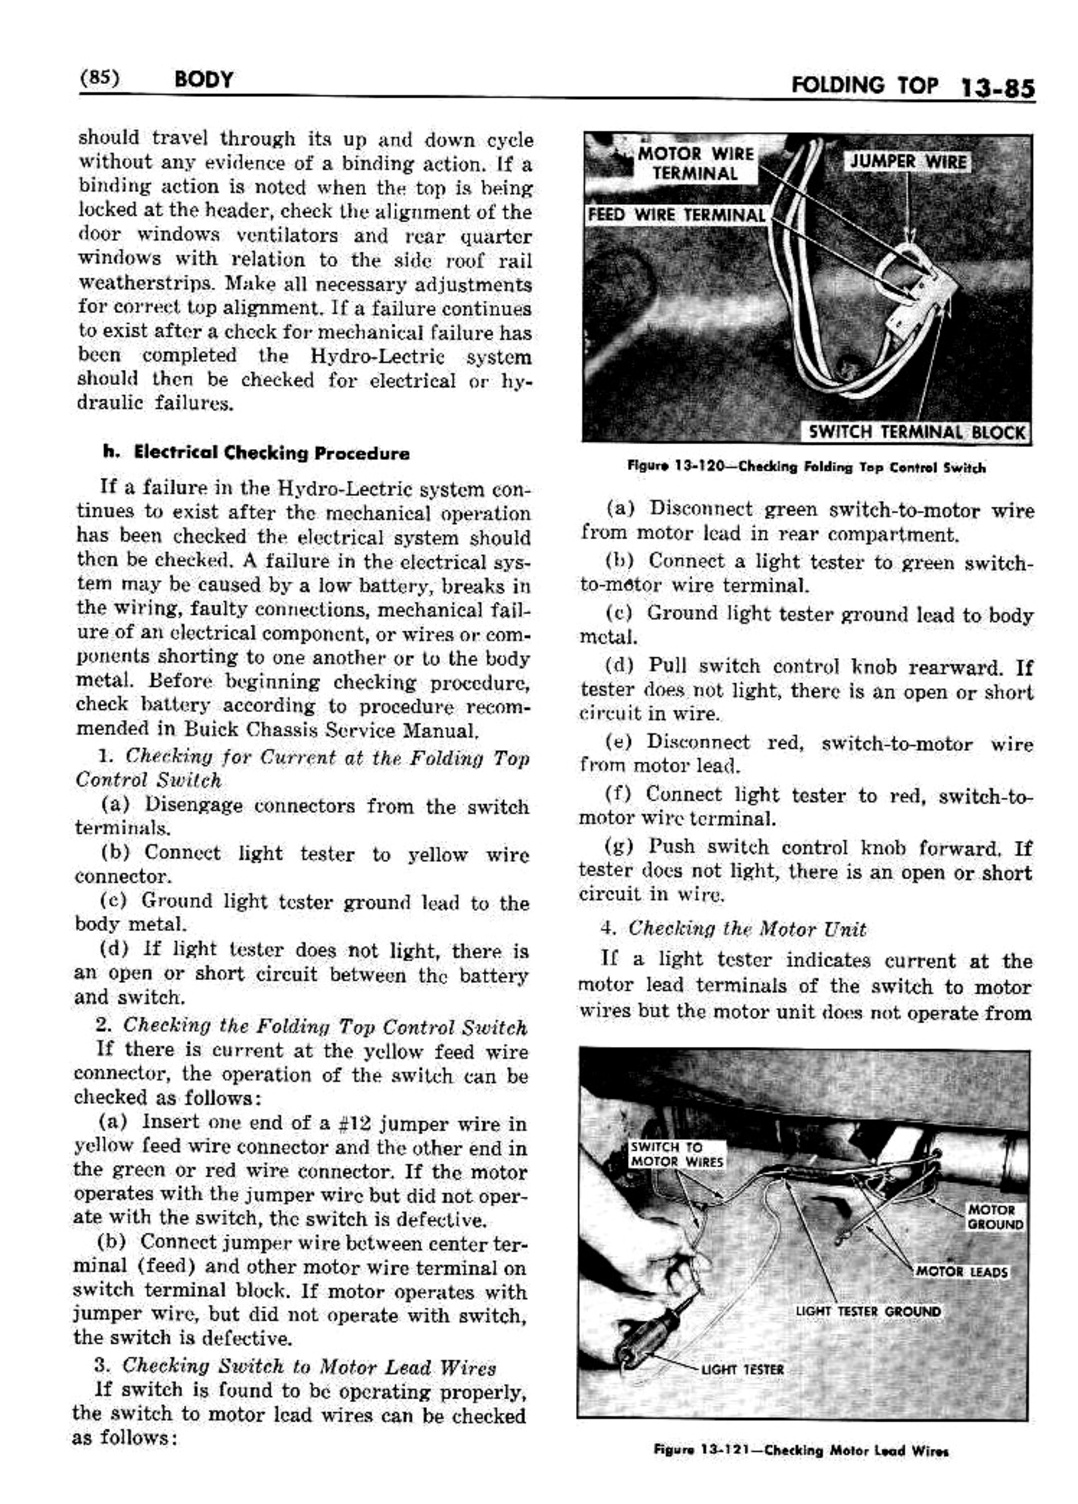 n_1958 Buick Body Service Manual-086-086.jpg